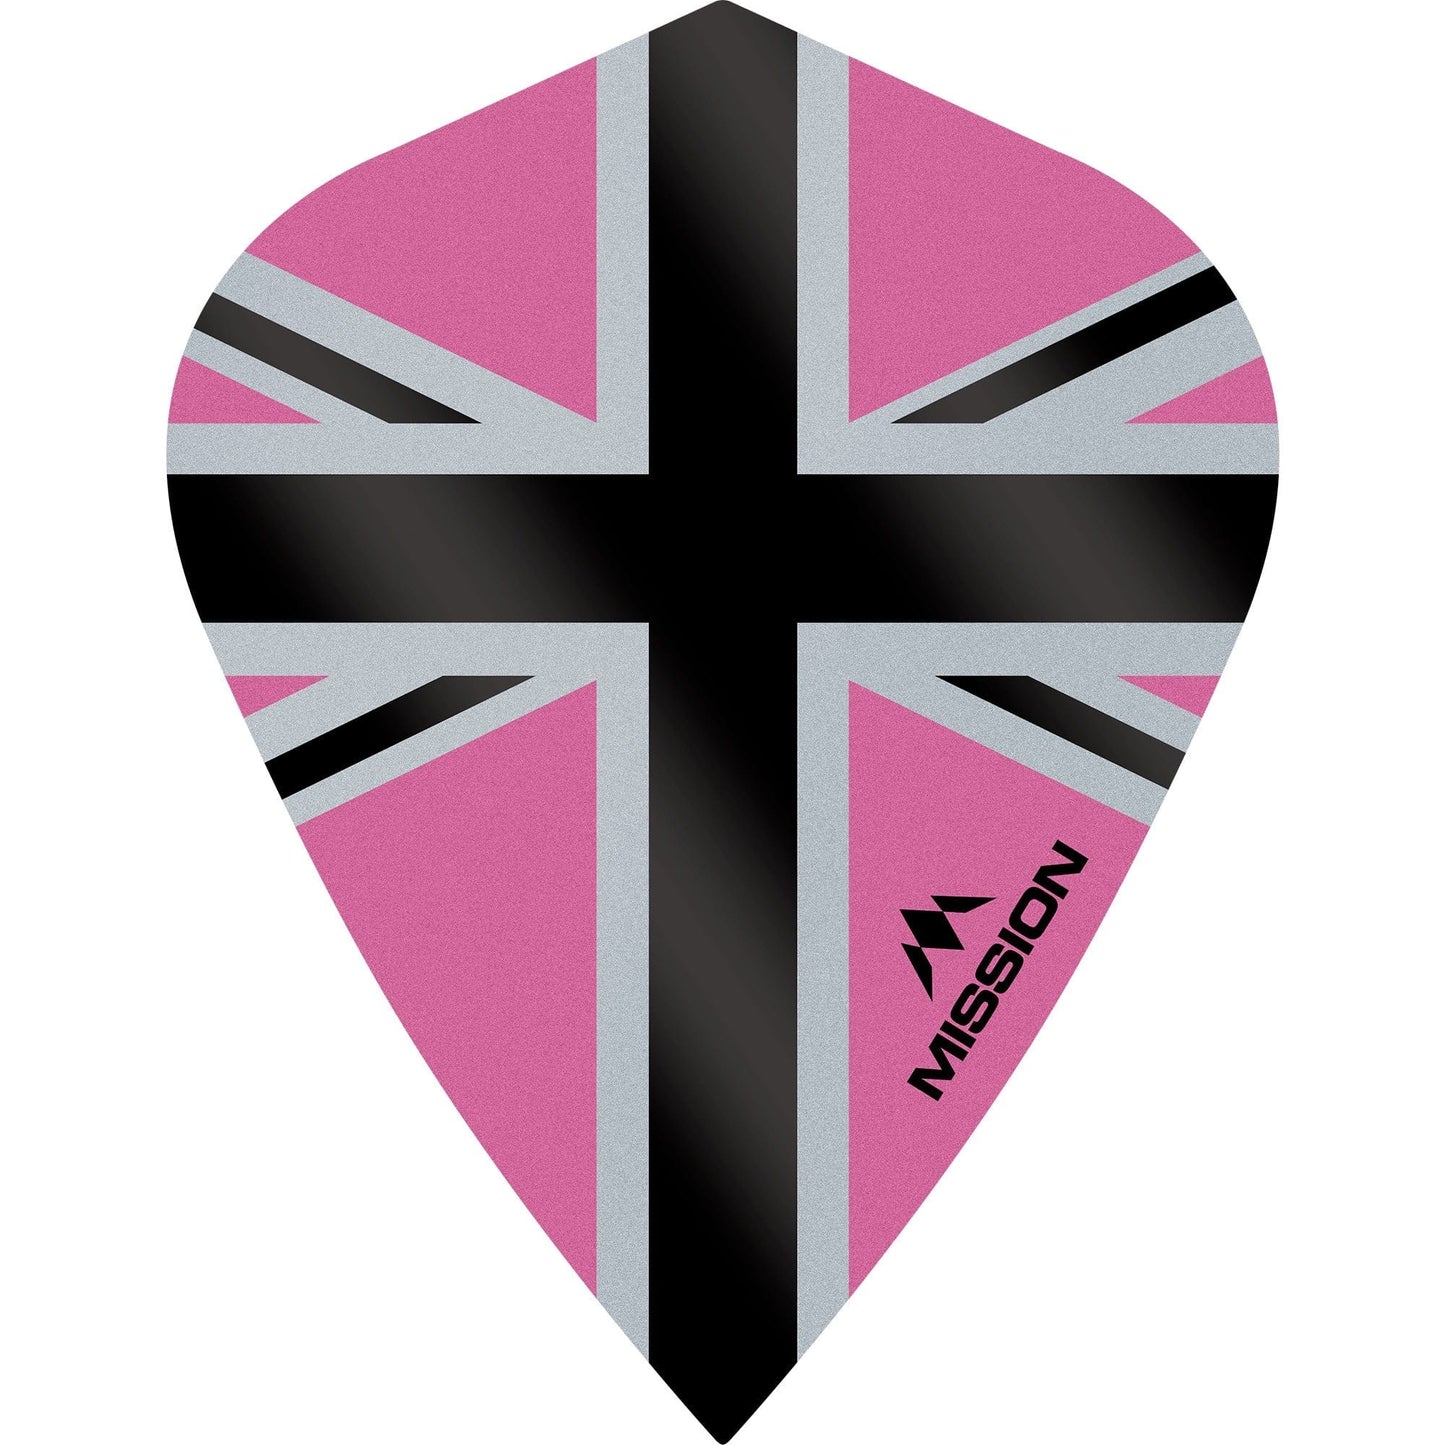 *Mission Alliance-X Union Jack Dart Flights - Kite Pink Black